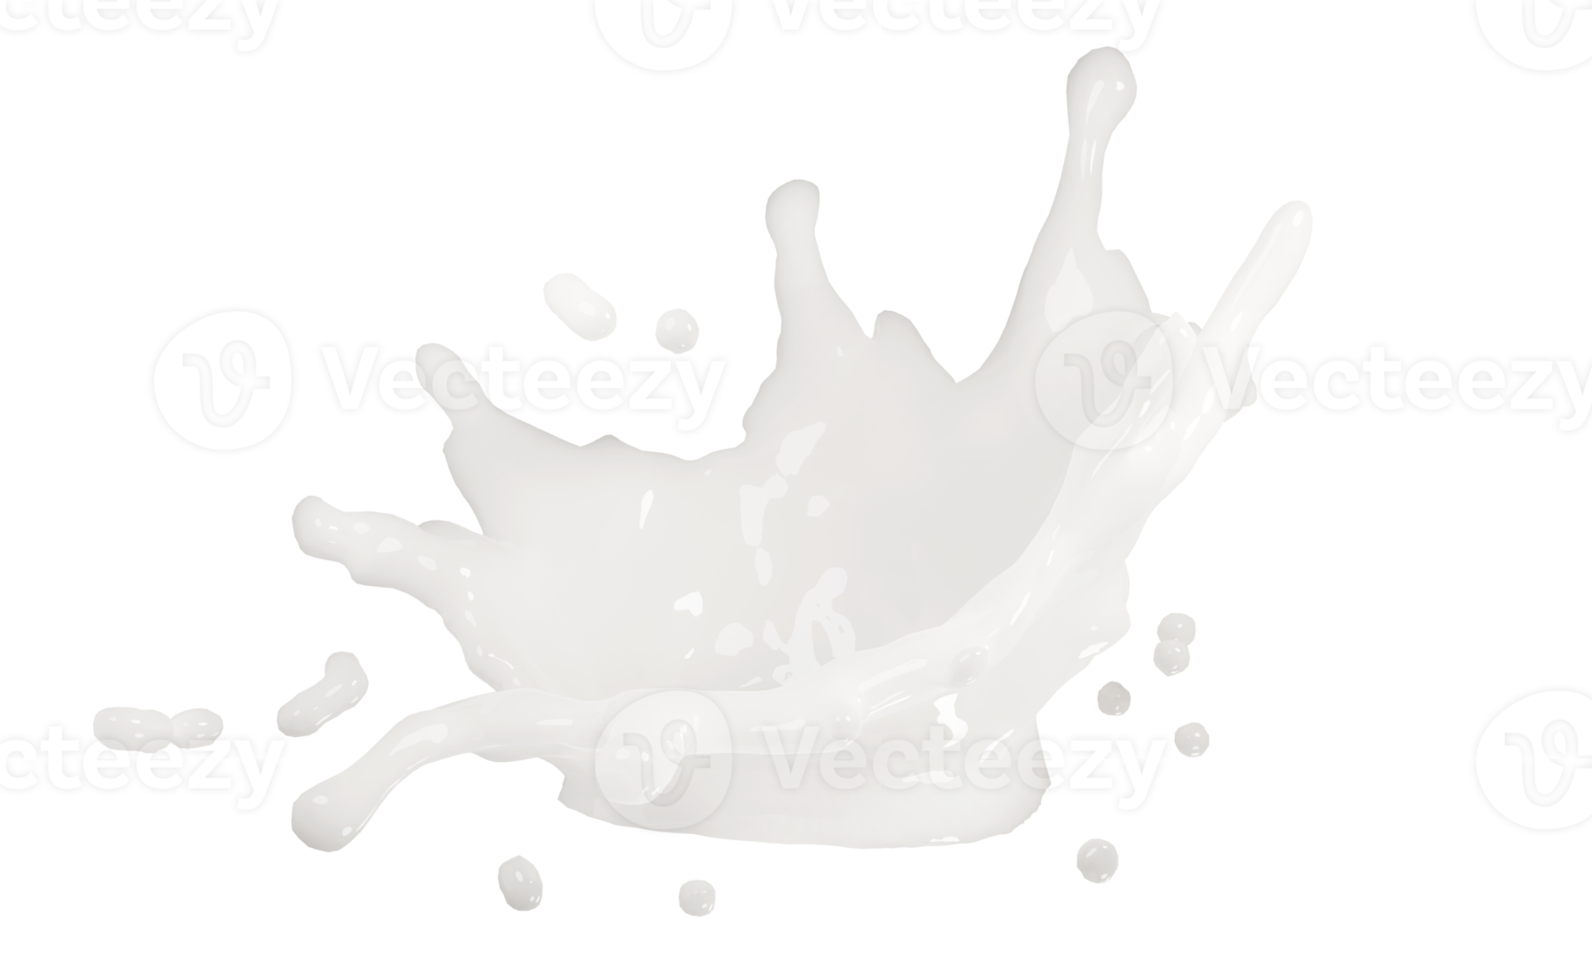 3d milk or yogurt ripple splash isolated. 3d render illustration png